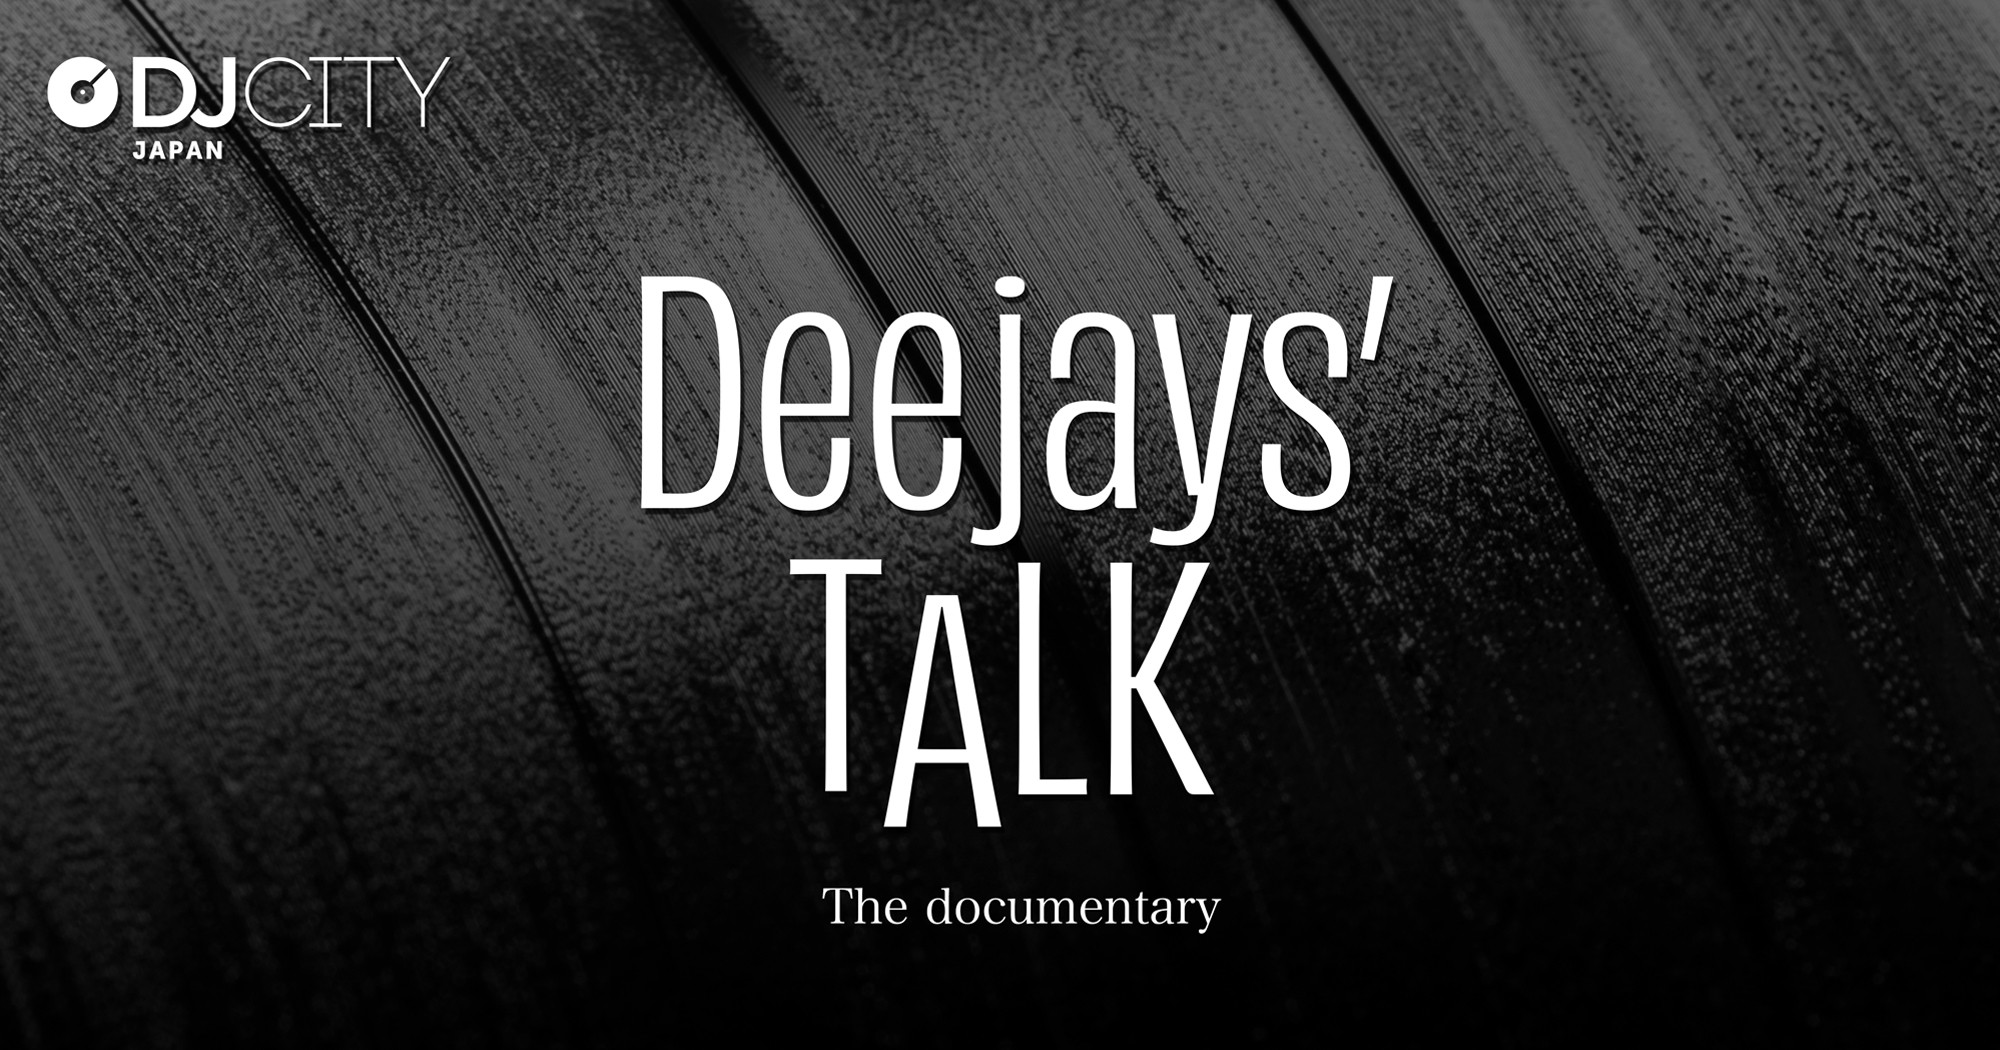 DJcity Japan Presents: DeeJays' TALK (Official Trailer)